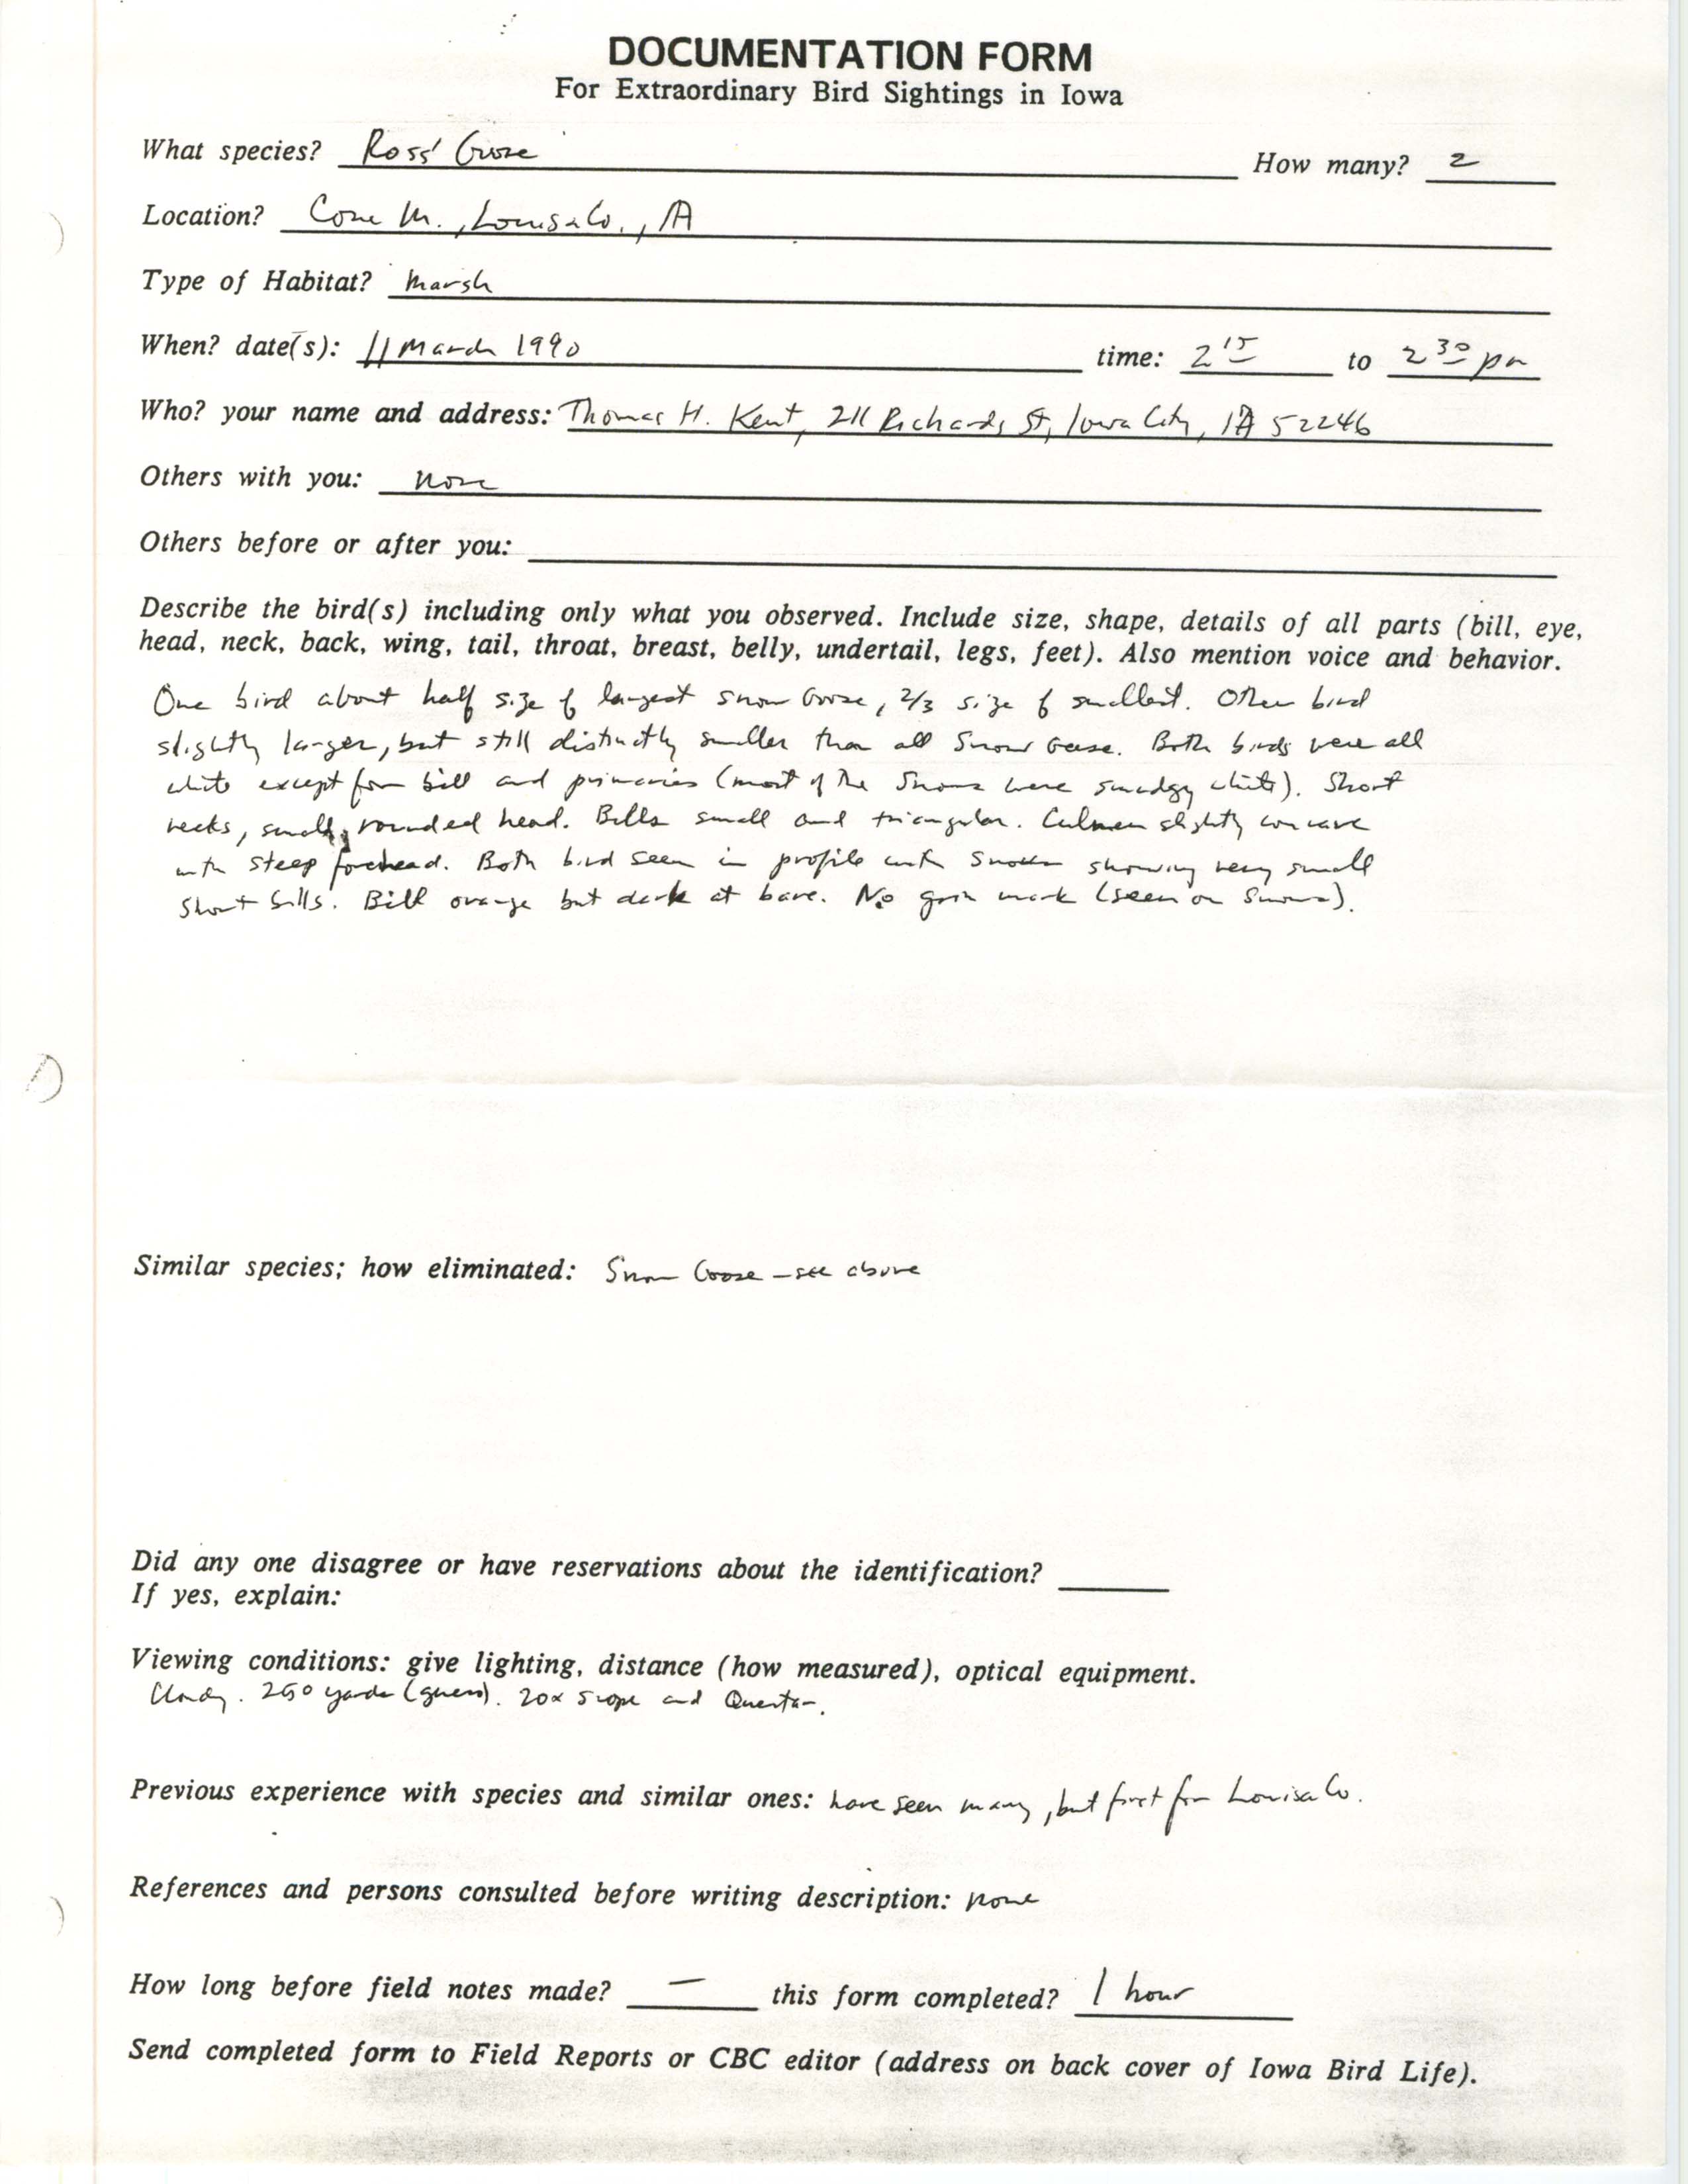 Rare bird documentation form for Ross' Goose at Cone Marsh, 1990